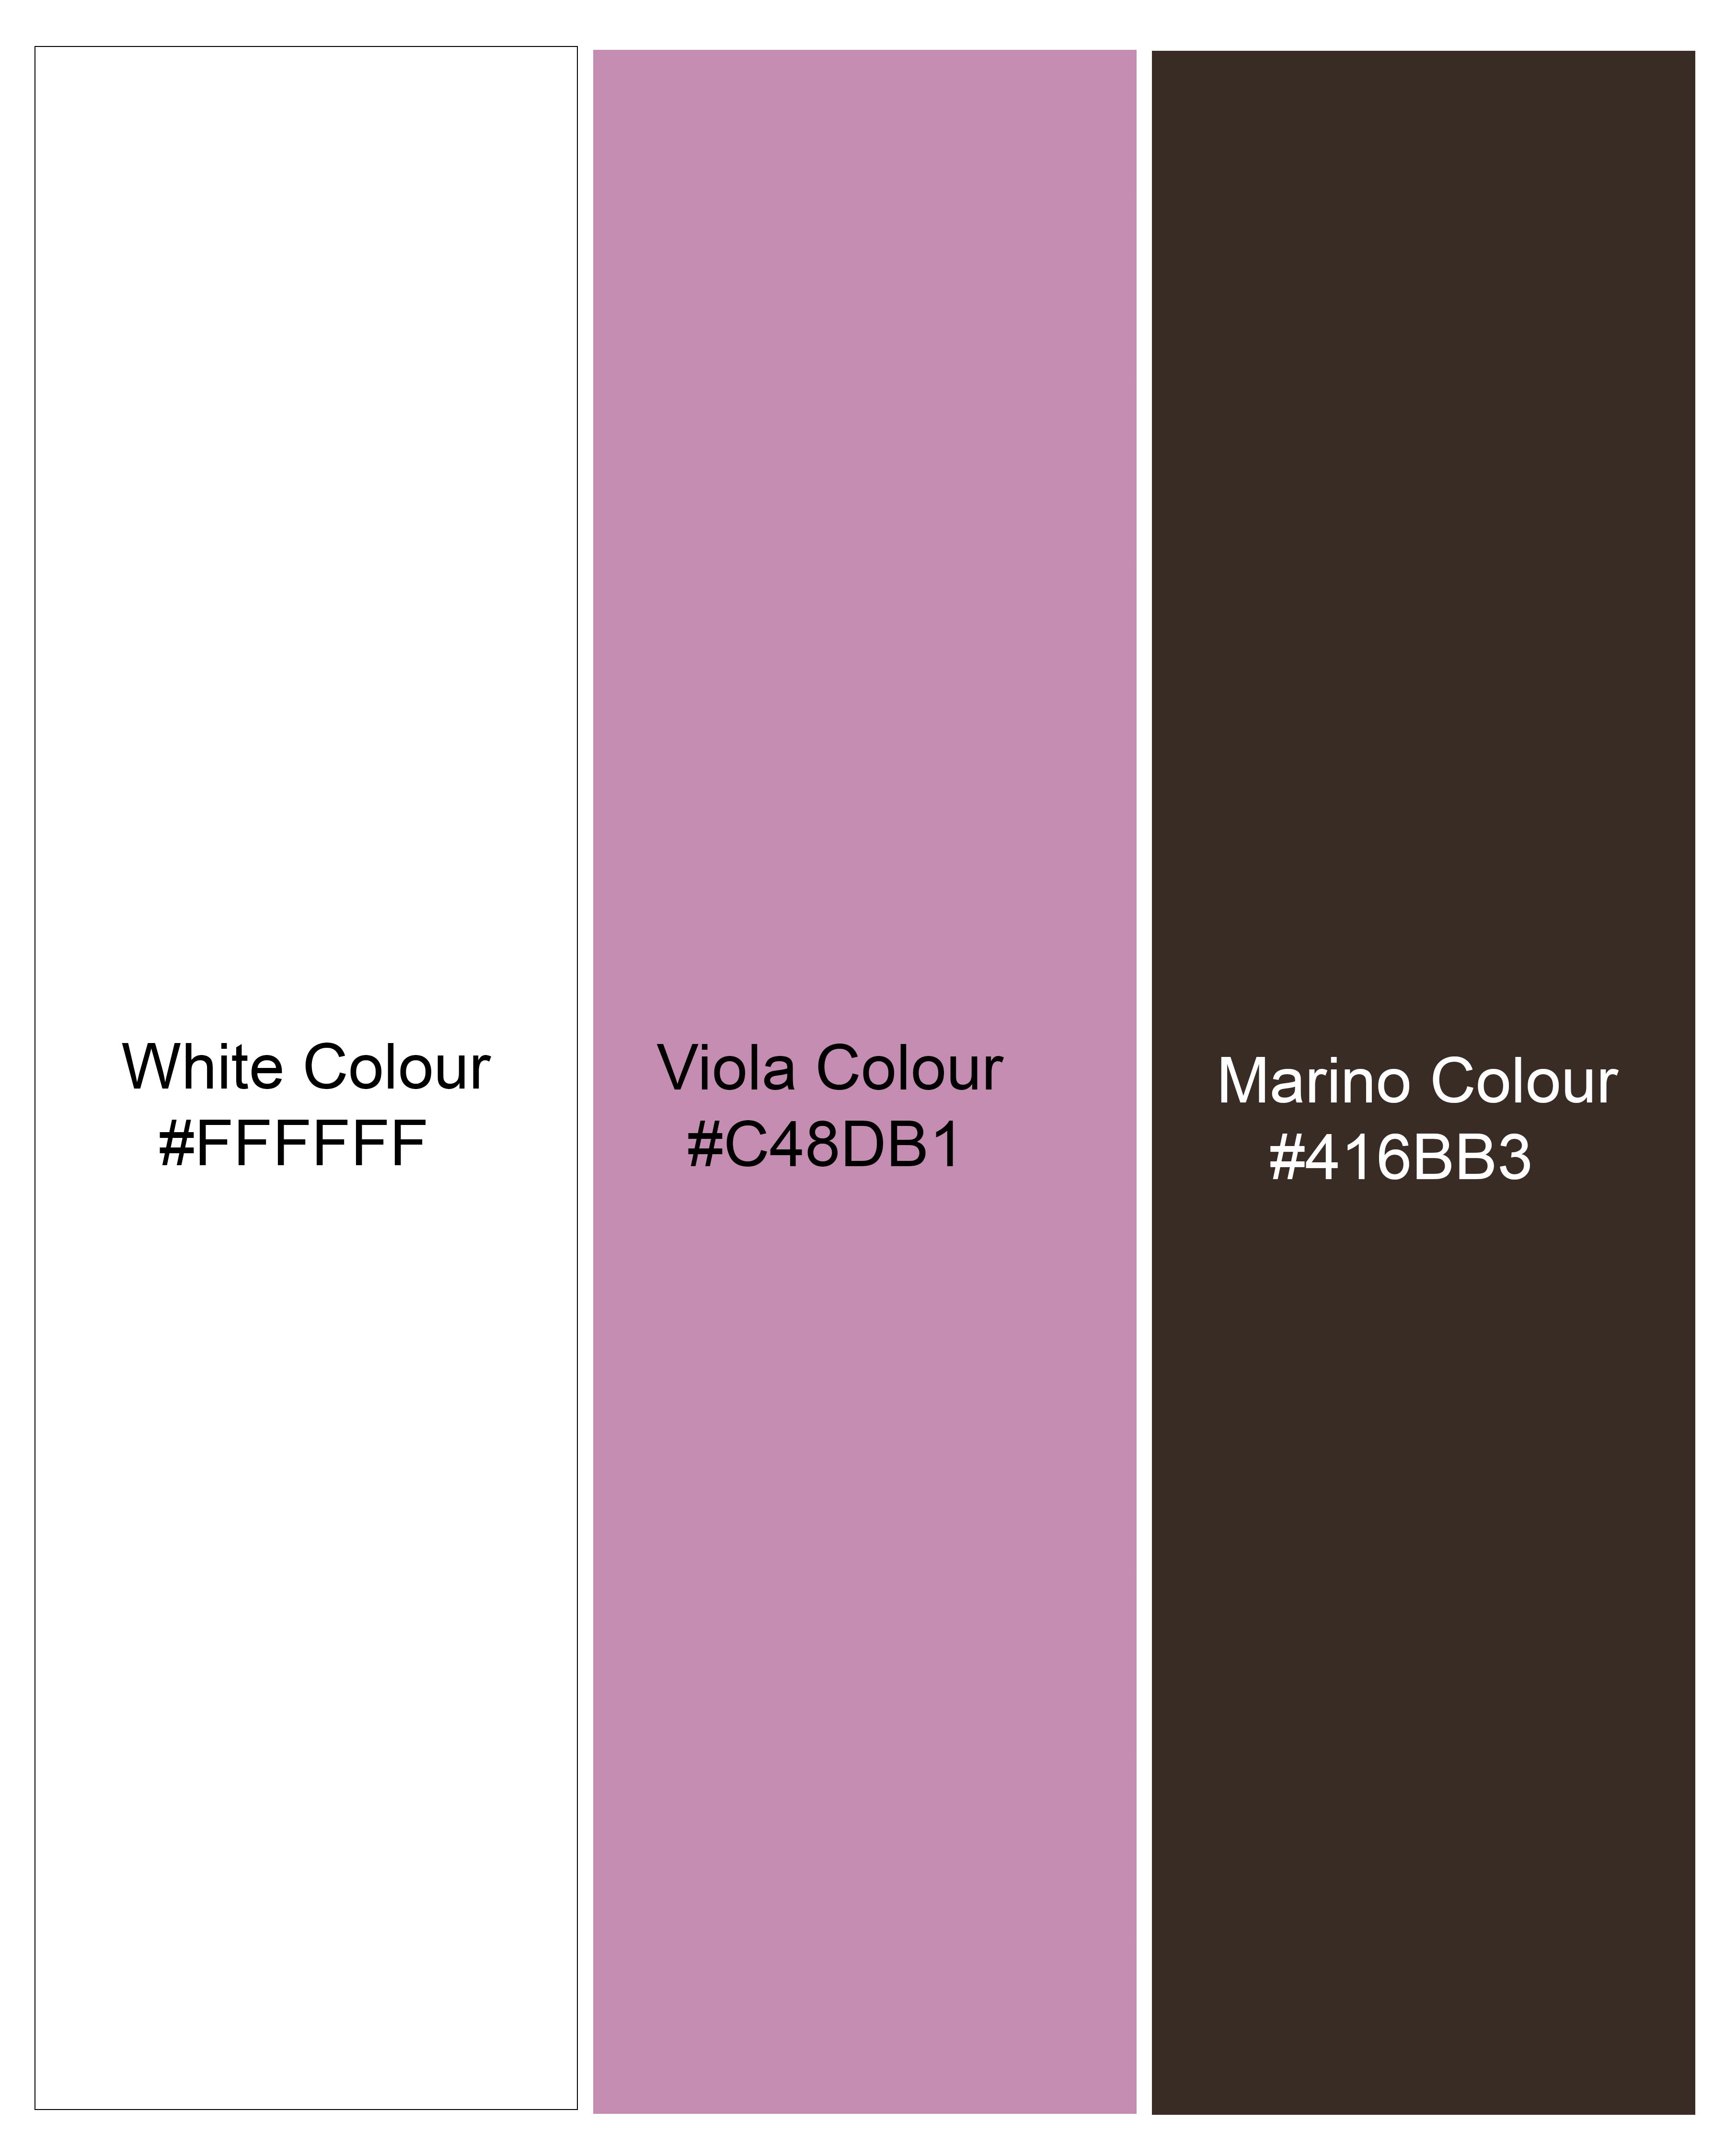 Bright White with Viola Pink Paisley Printed Super Soft Premium Cotton Shirt 8423-CA-38, 8423-CA-H-38, 8423-CA-39,8423-CA-H-39, 8423-CA-40, 8423-CA-H-40, 8423-CA-42, 8423-CA-H-42, 8423-CA-44, 8423-CA-H-44, 8423-CA-46, 8423-CA-H-46, 8423-CA-48, 8423-CA-H-48, 8423-CA-50, 8423-CA-H-50, 8423-CA-52, 8423-CA-H-52